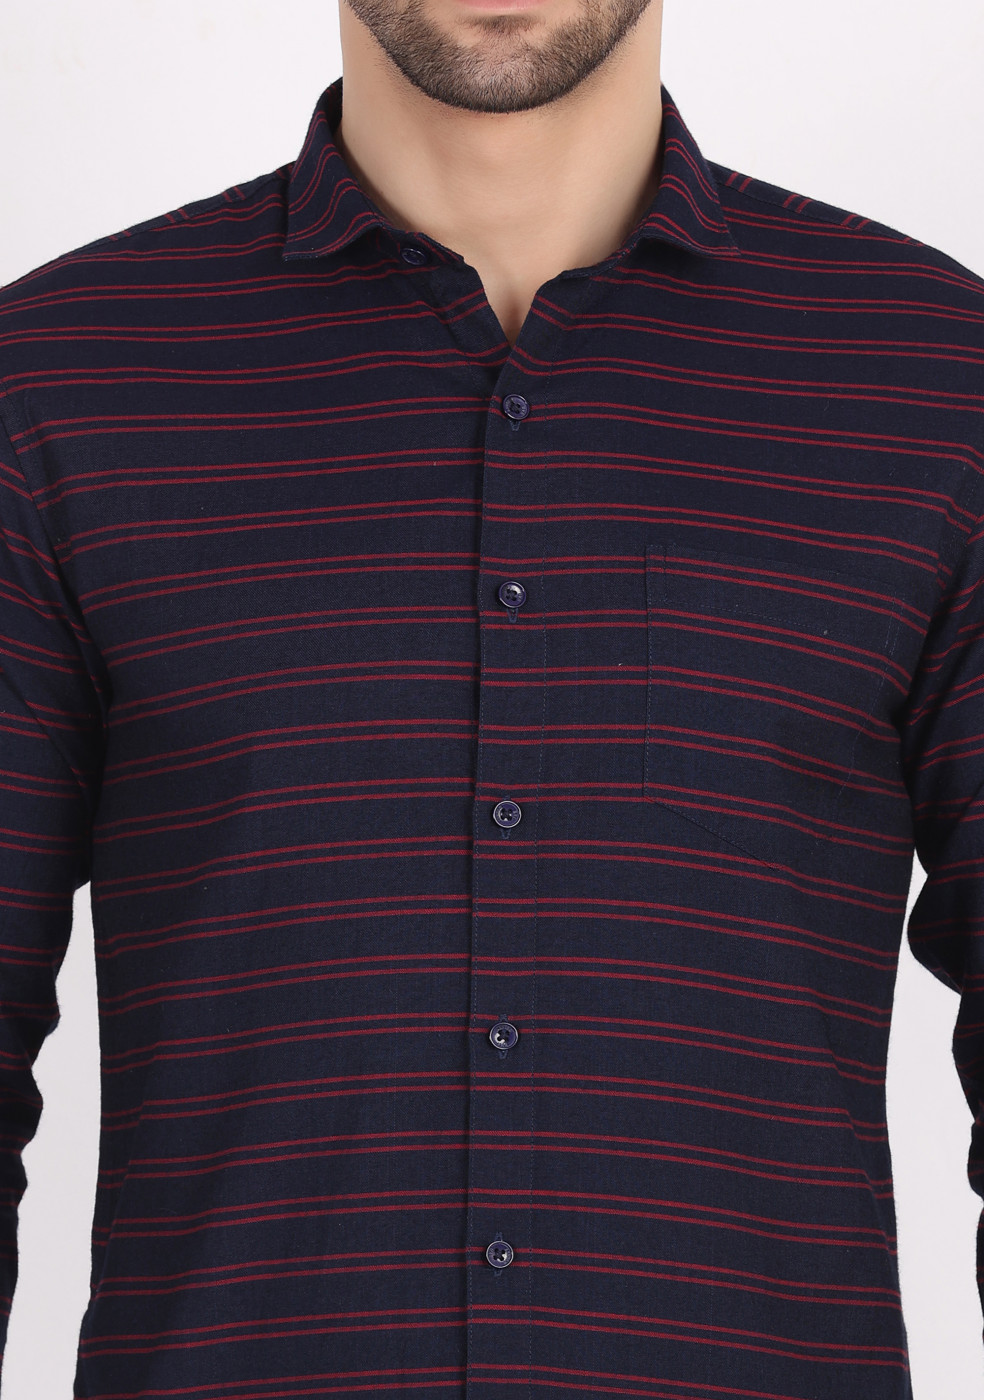 ASHTOM Men Navy & Red Horizontal Striped Casual Shirt